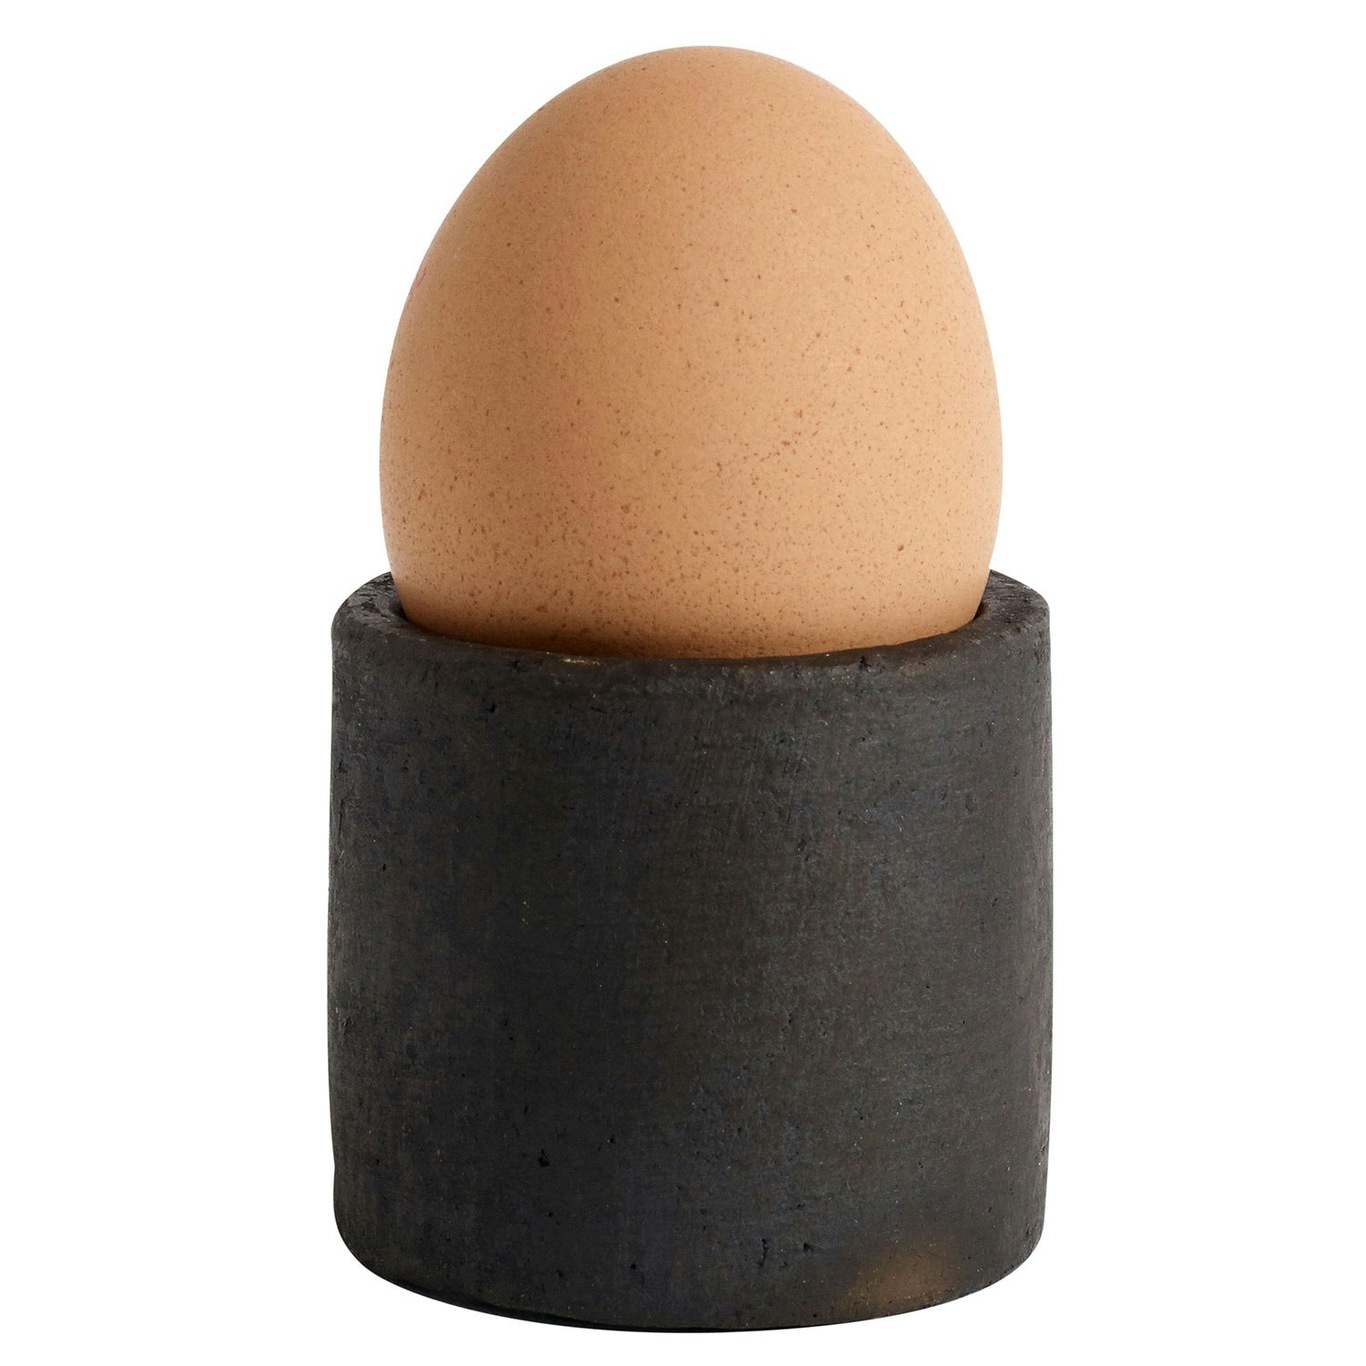 https://royaldesign.com/image/2/muubs-hazel-egg-cup-1?w=800&quality=80